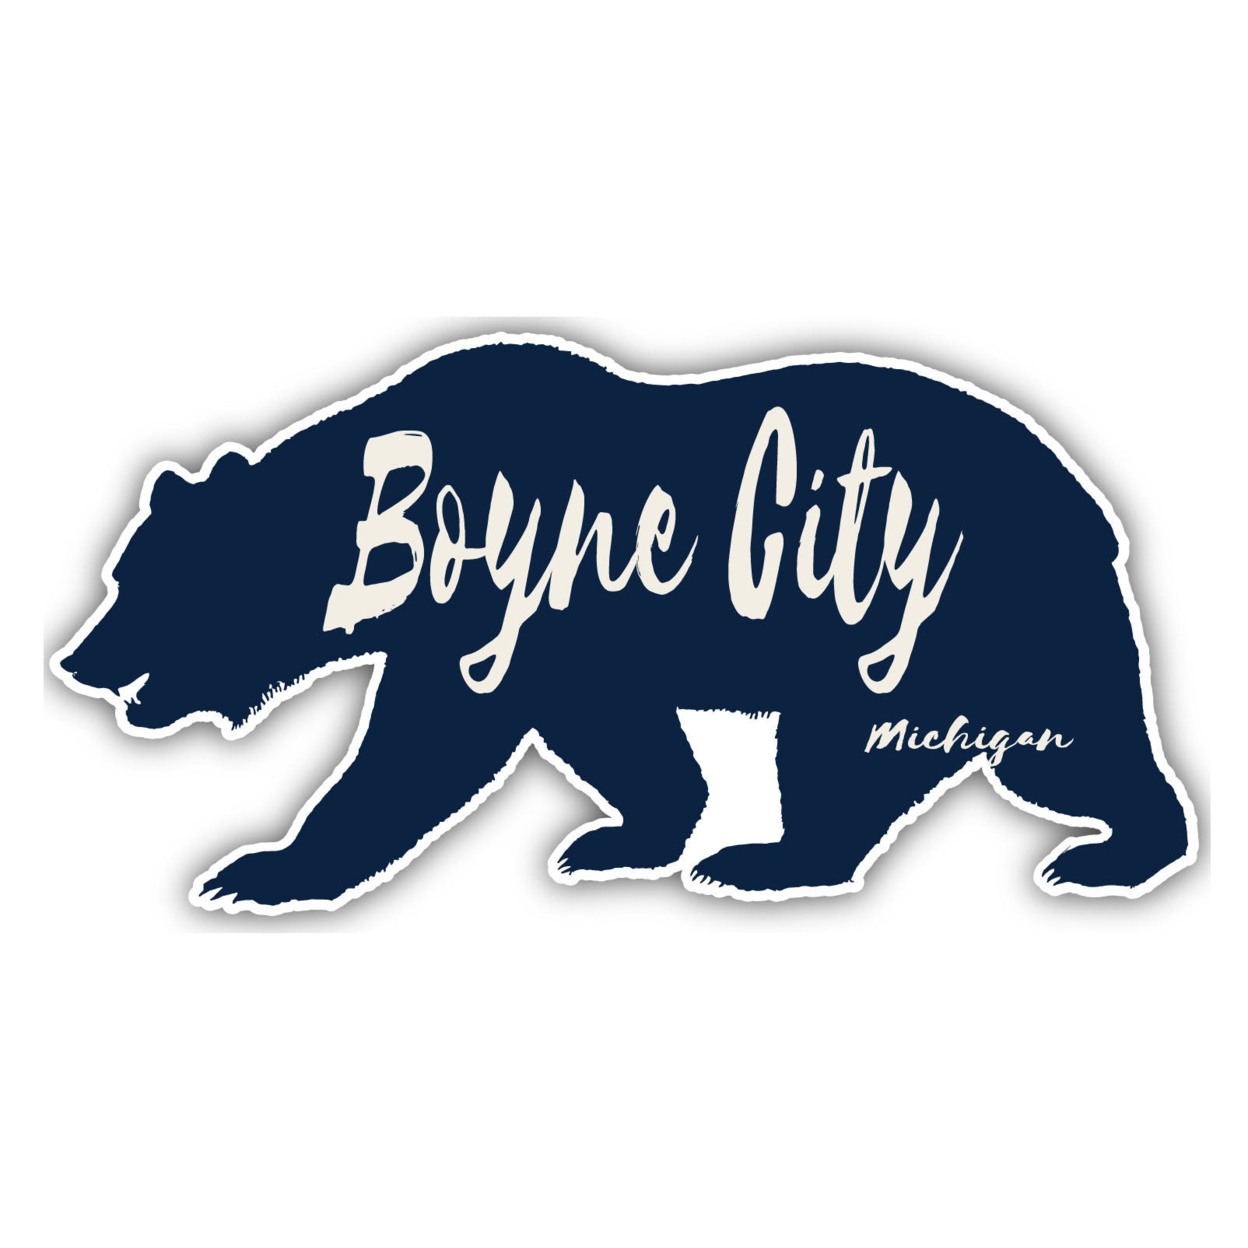 Boyne City Michigan Souvenir Decorative Stickers (Choose Theme And Size) - Single Unit, 6-Inch, Tent